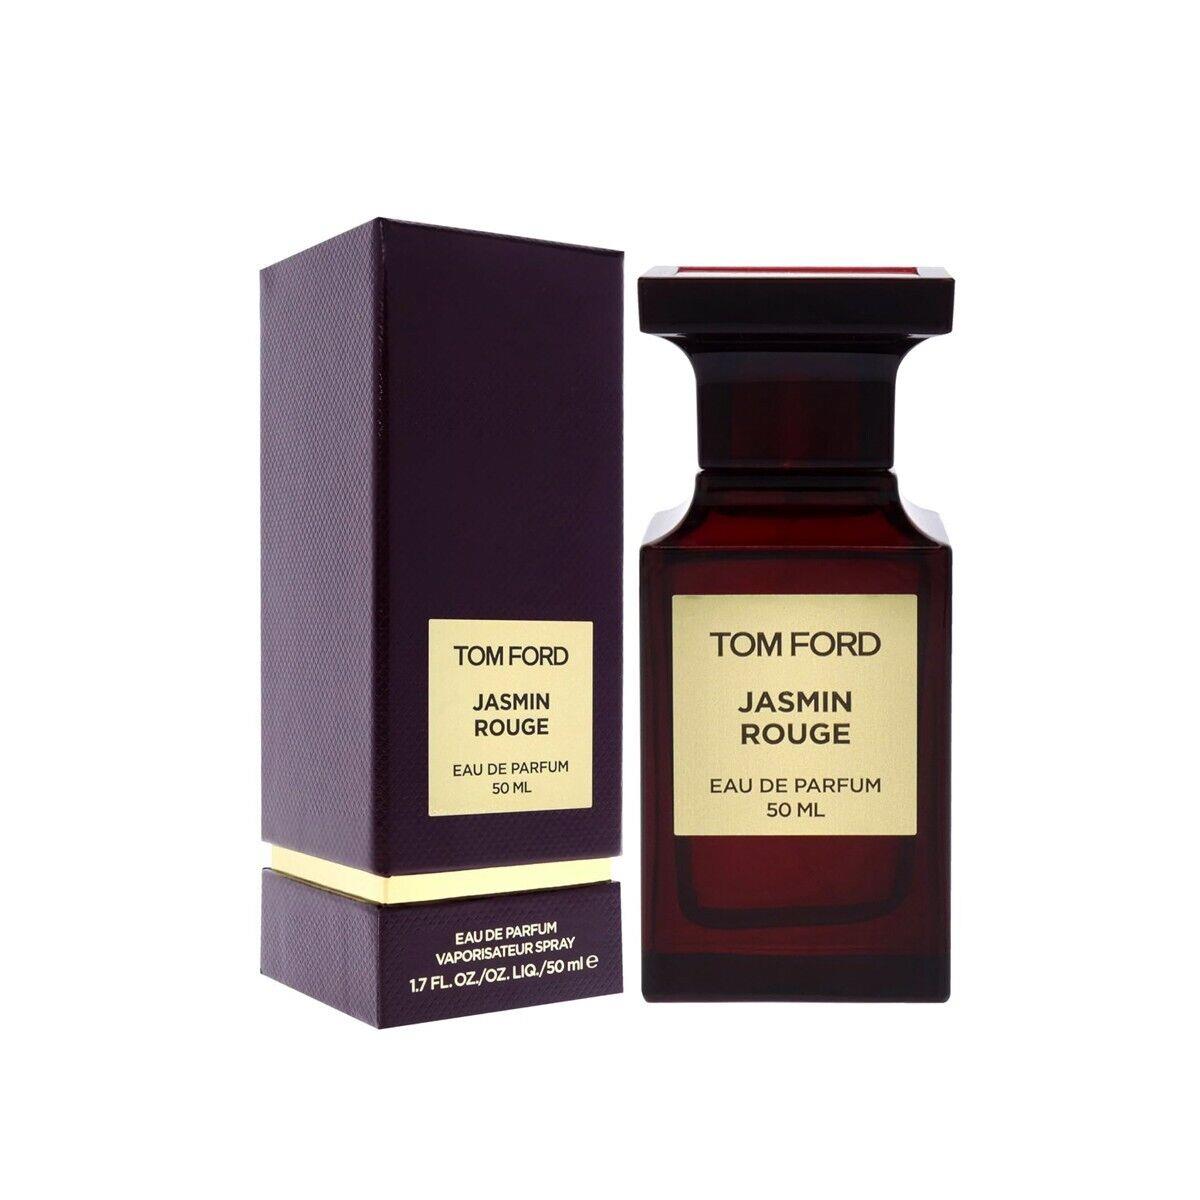 Tom Ford Jasmin Rouge Eau De Parfum Edp Spray - Size 1.7 Oz. / 50mL